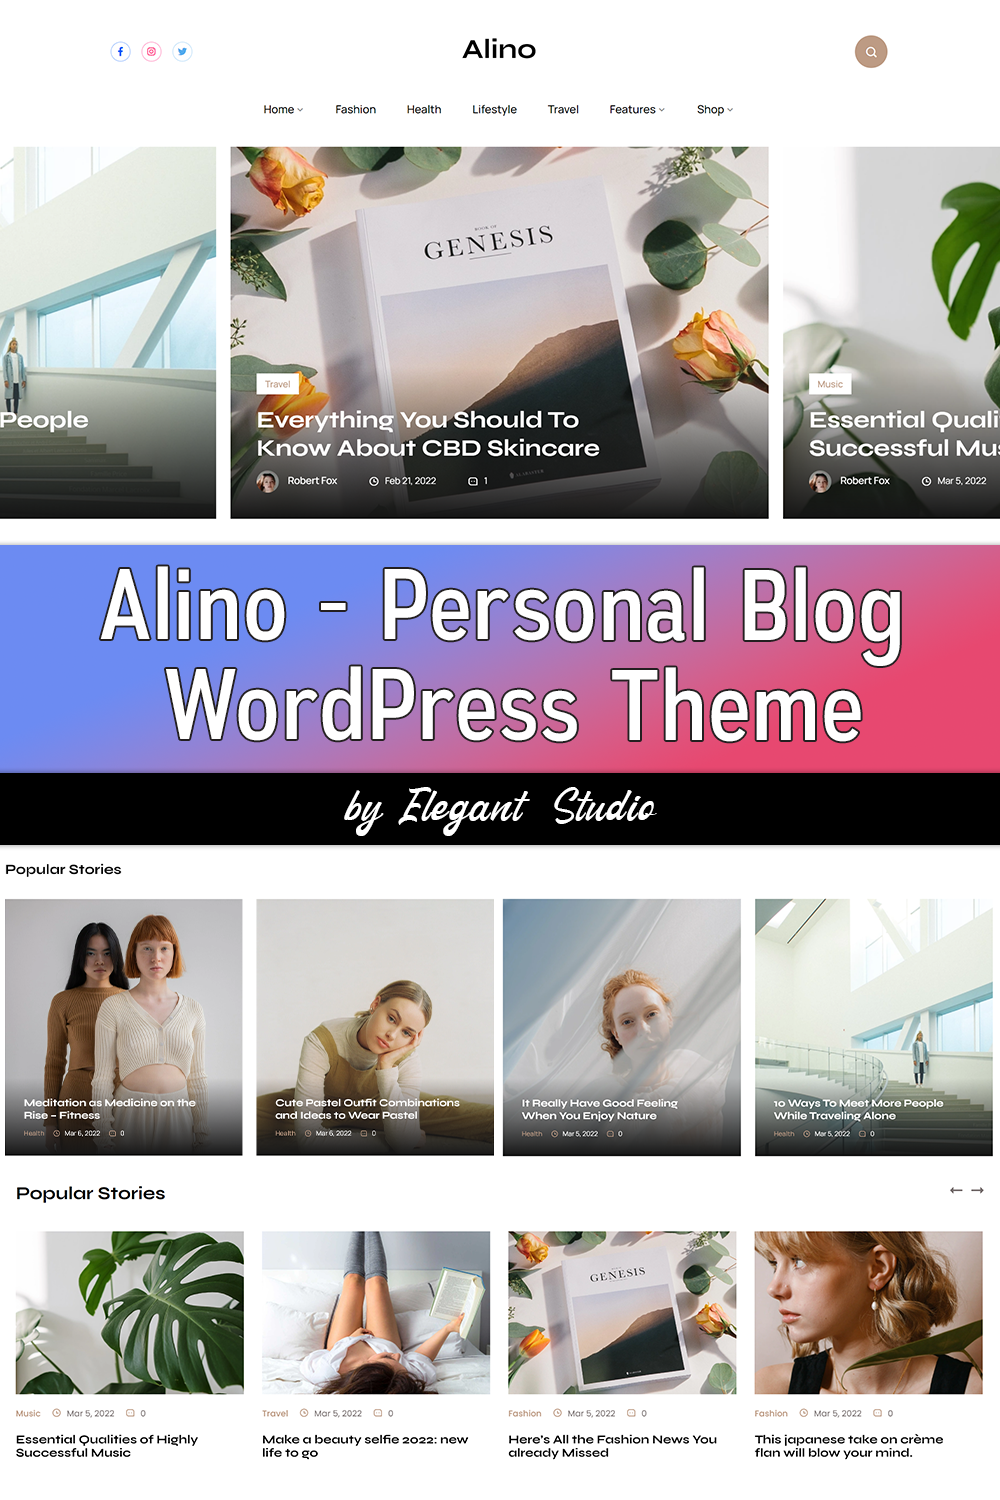 Pinterest of alino personal blog wordpress theme.